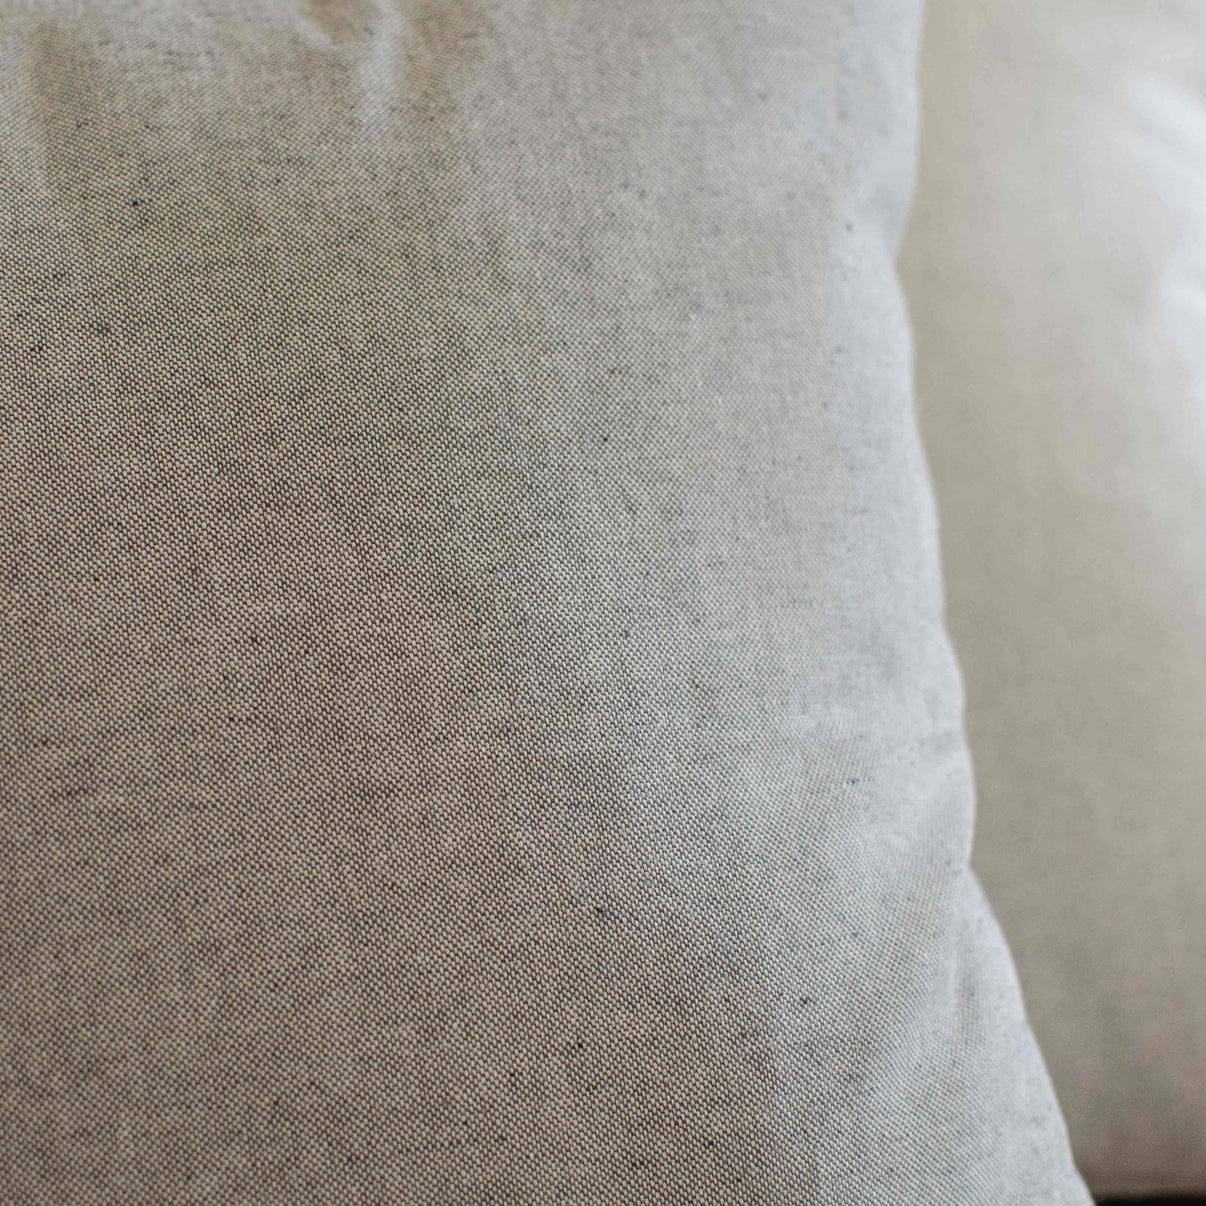 Rooom - Stone recycled pillowcase